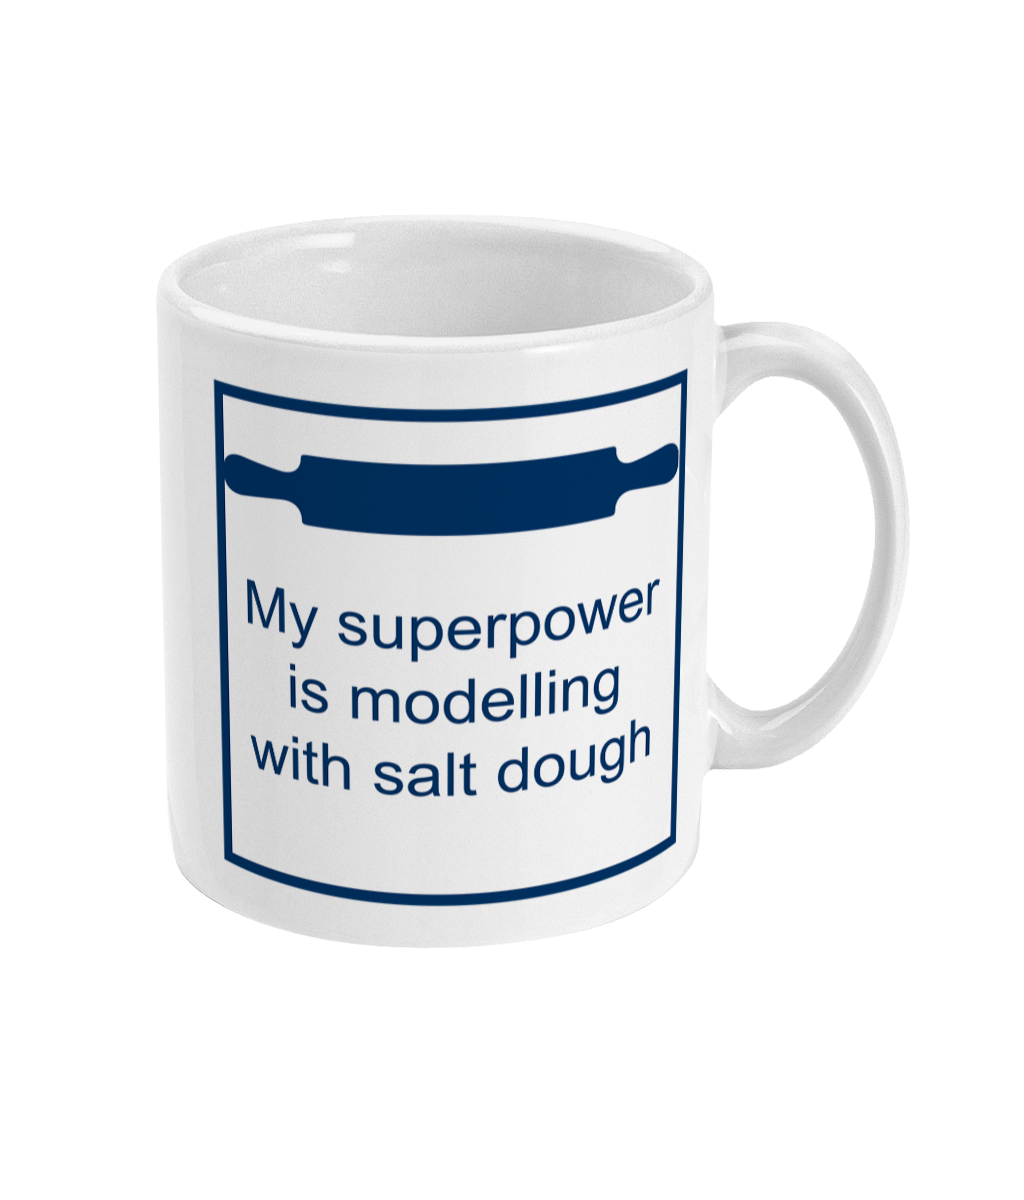 my superpower is salt dough modeling on a mug